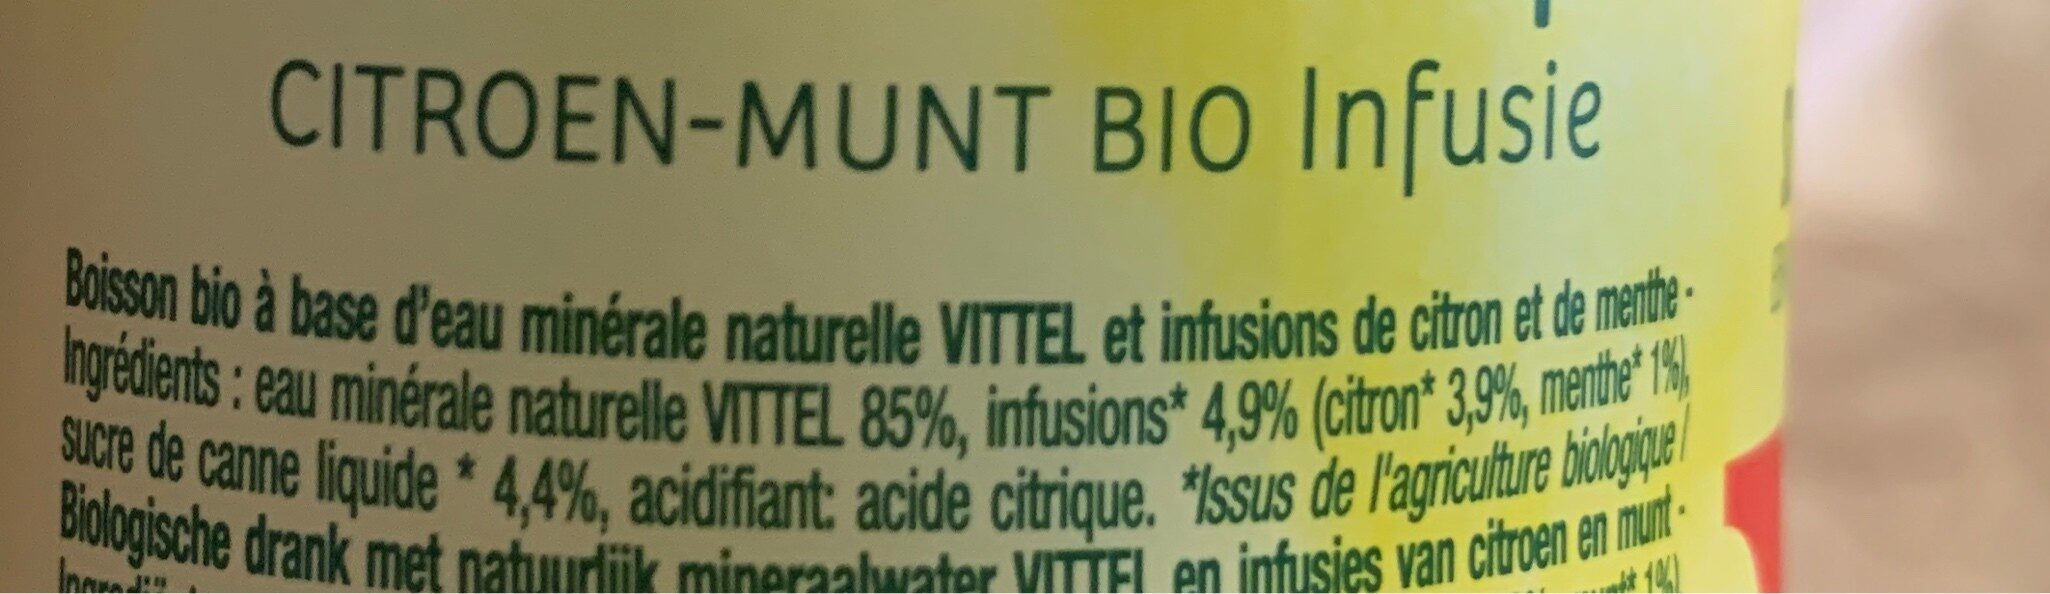 Citron menthe bio infusés - Ingrediënten - fr